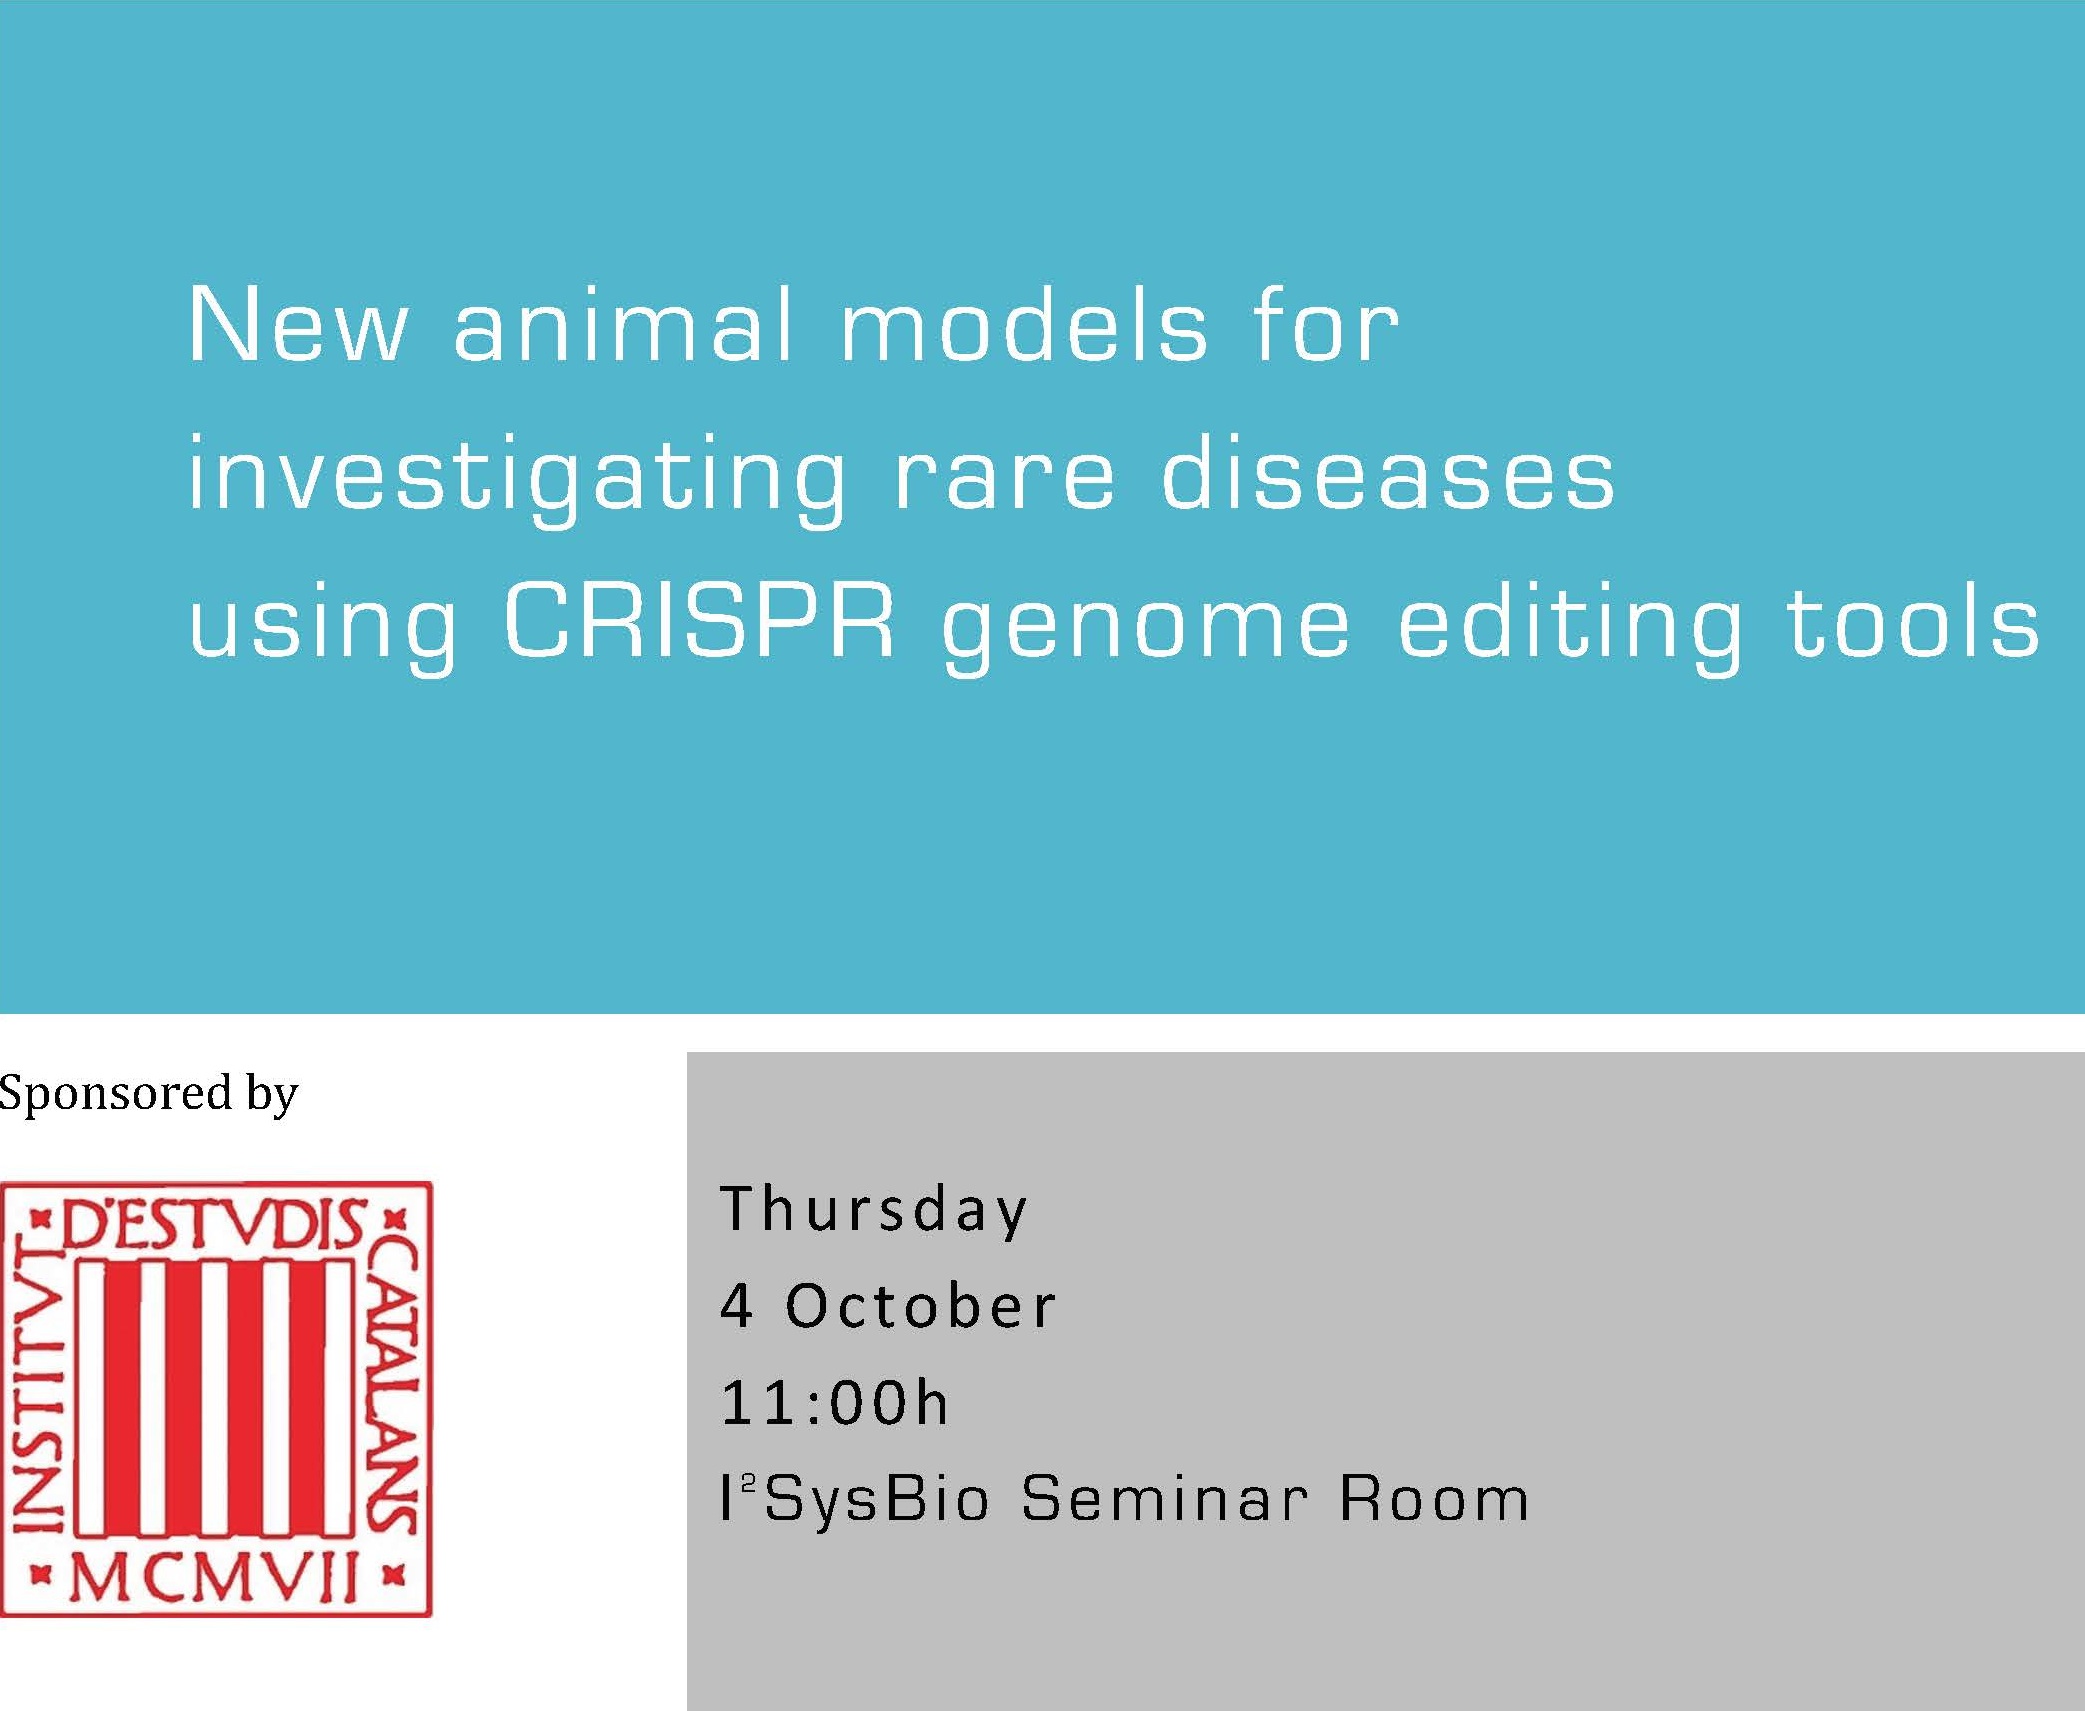 New animal models for investigating rare diseases using CRISPR genome editing tools